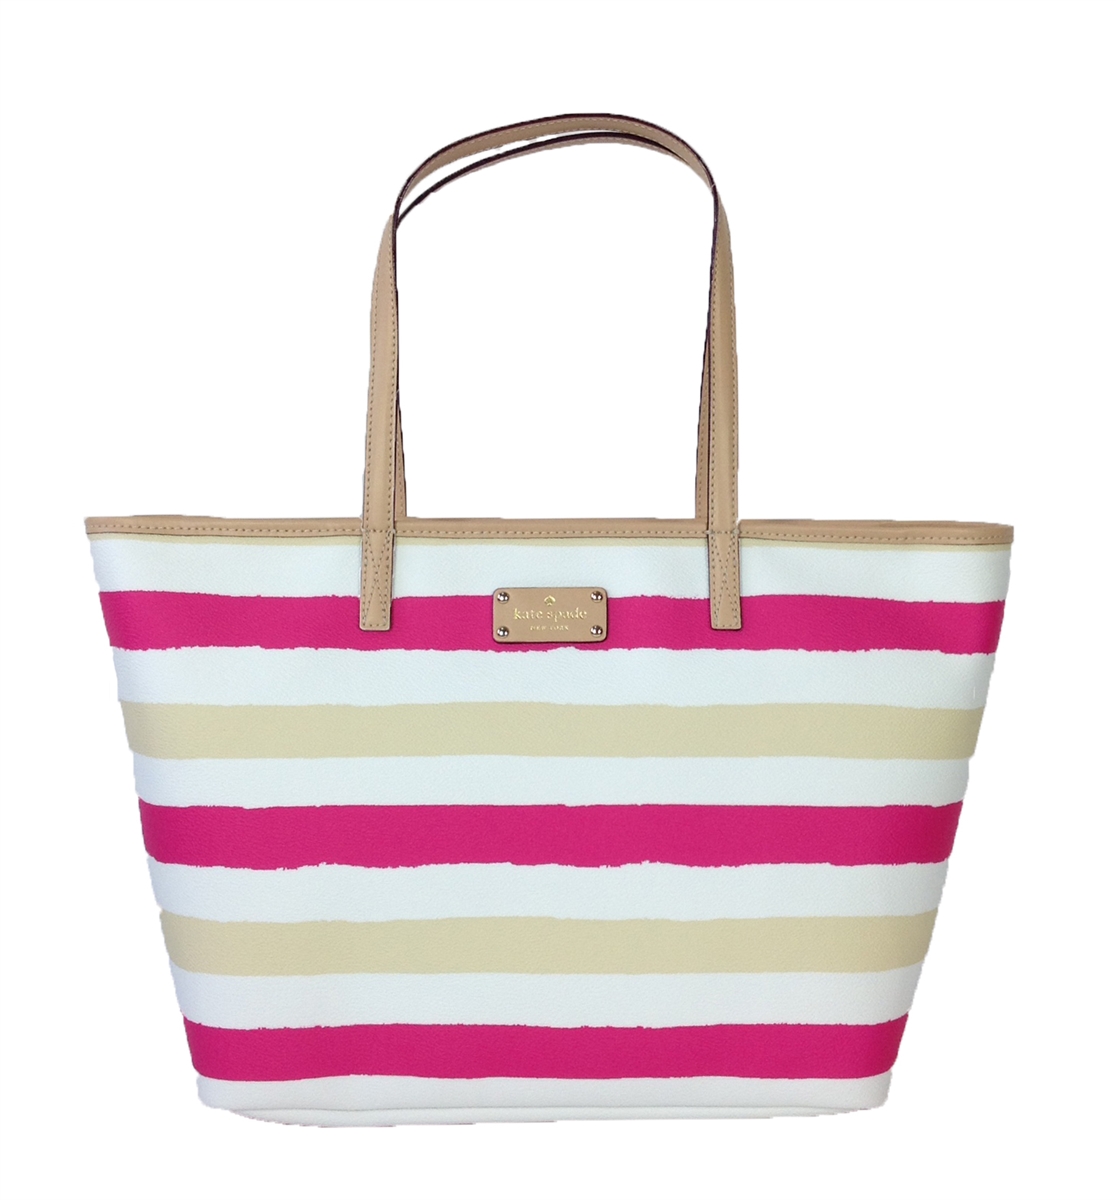 Kate Spade Multi Navy Pink White Striped Tote Bag Purse Handbag | eBay